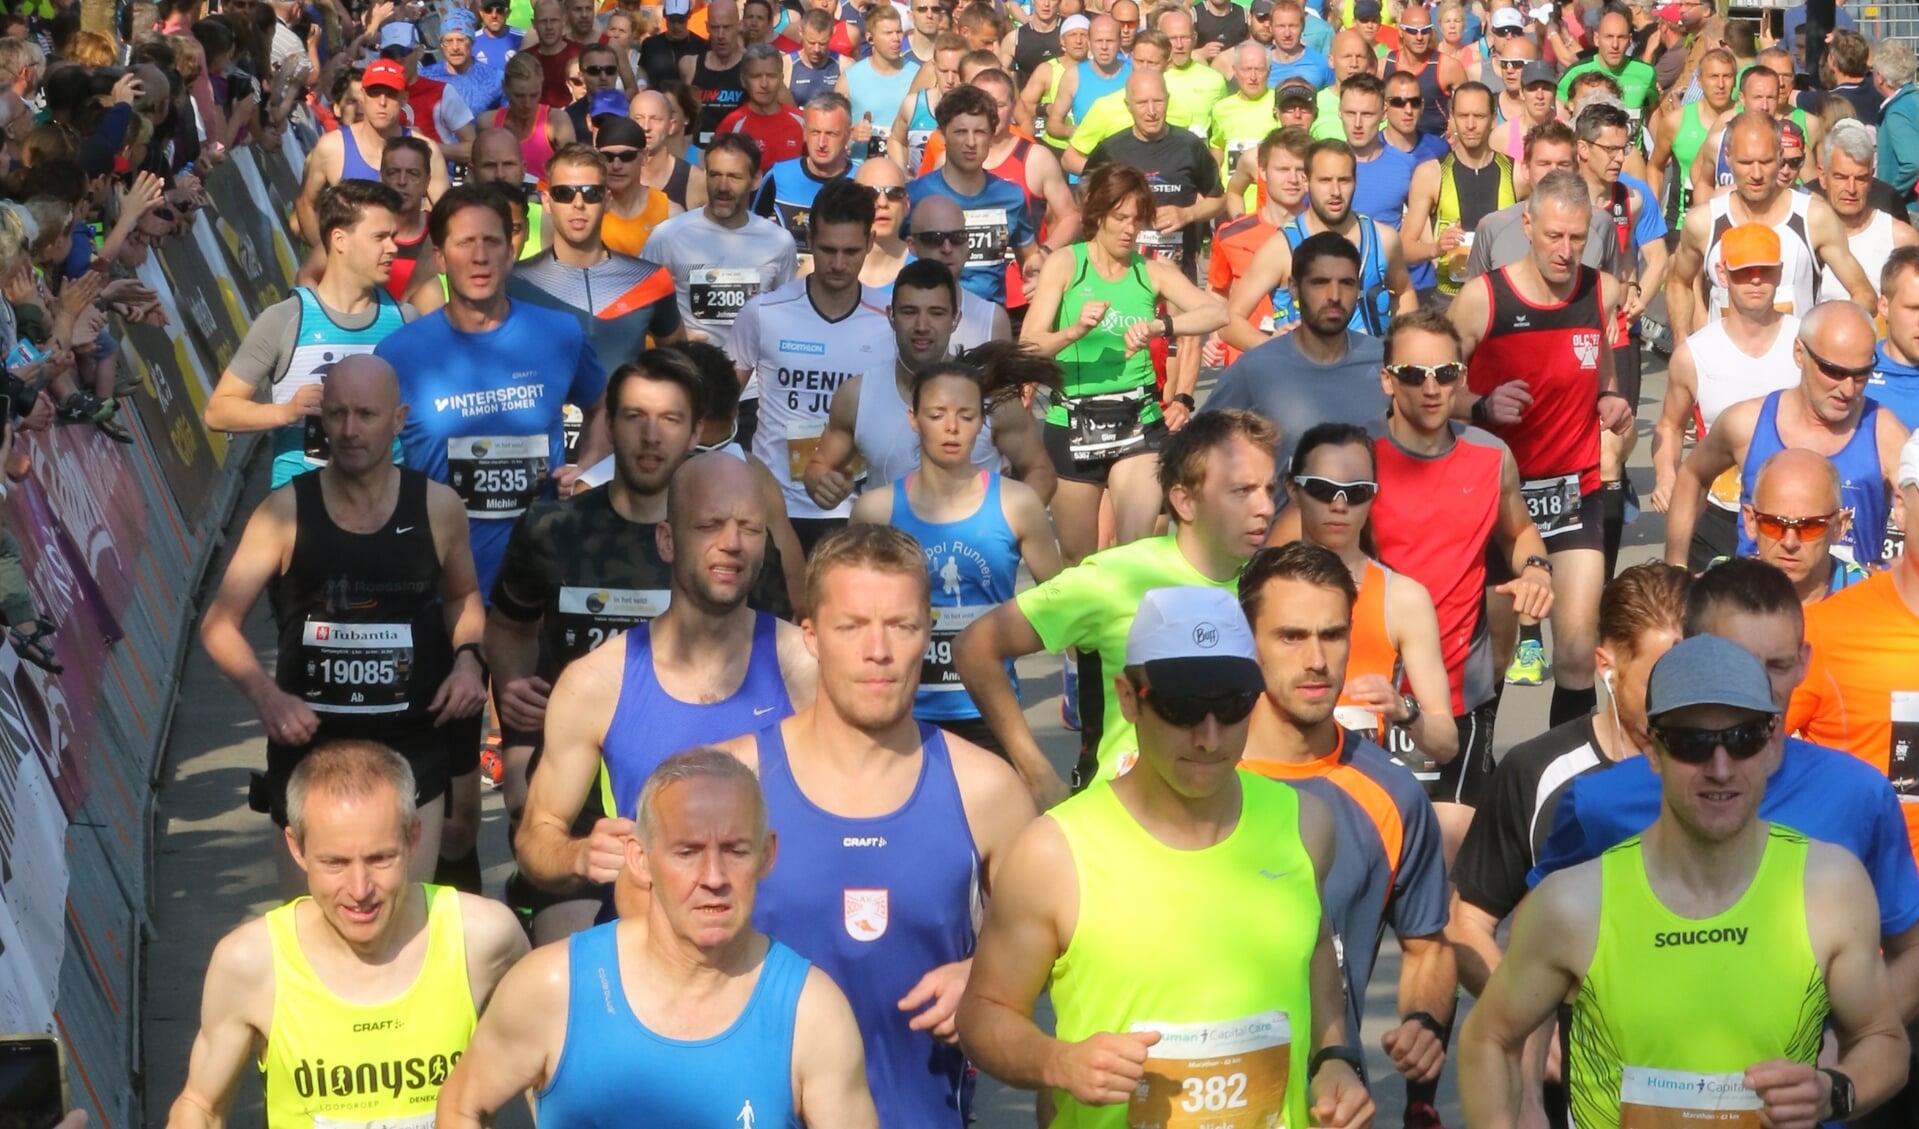 De hele marathon van de Marathon Enschede wordt in 2023 één grote ronde.